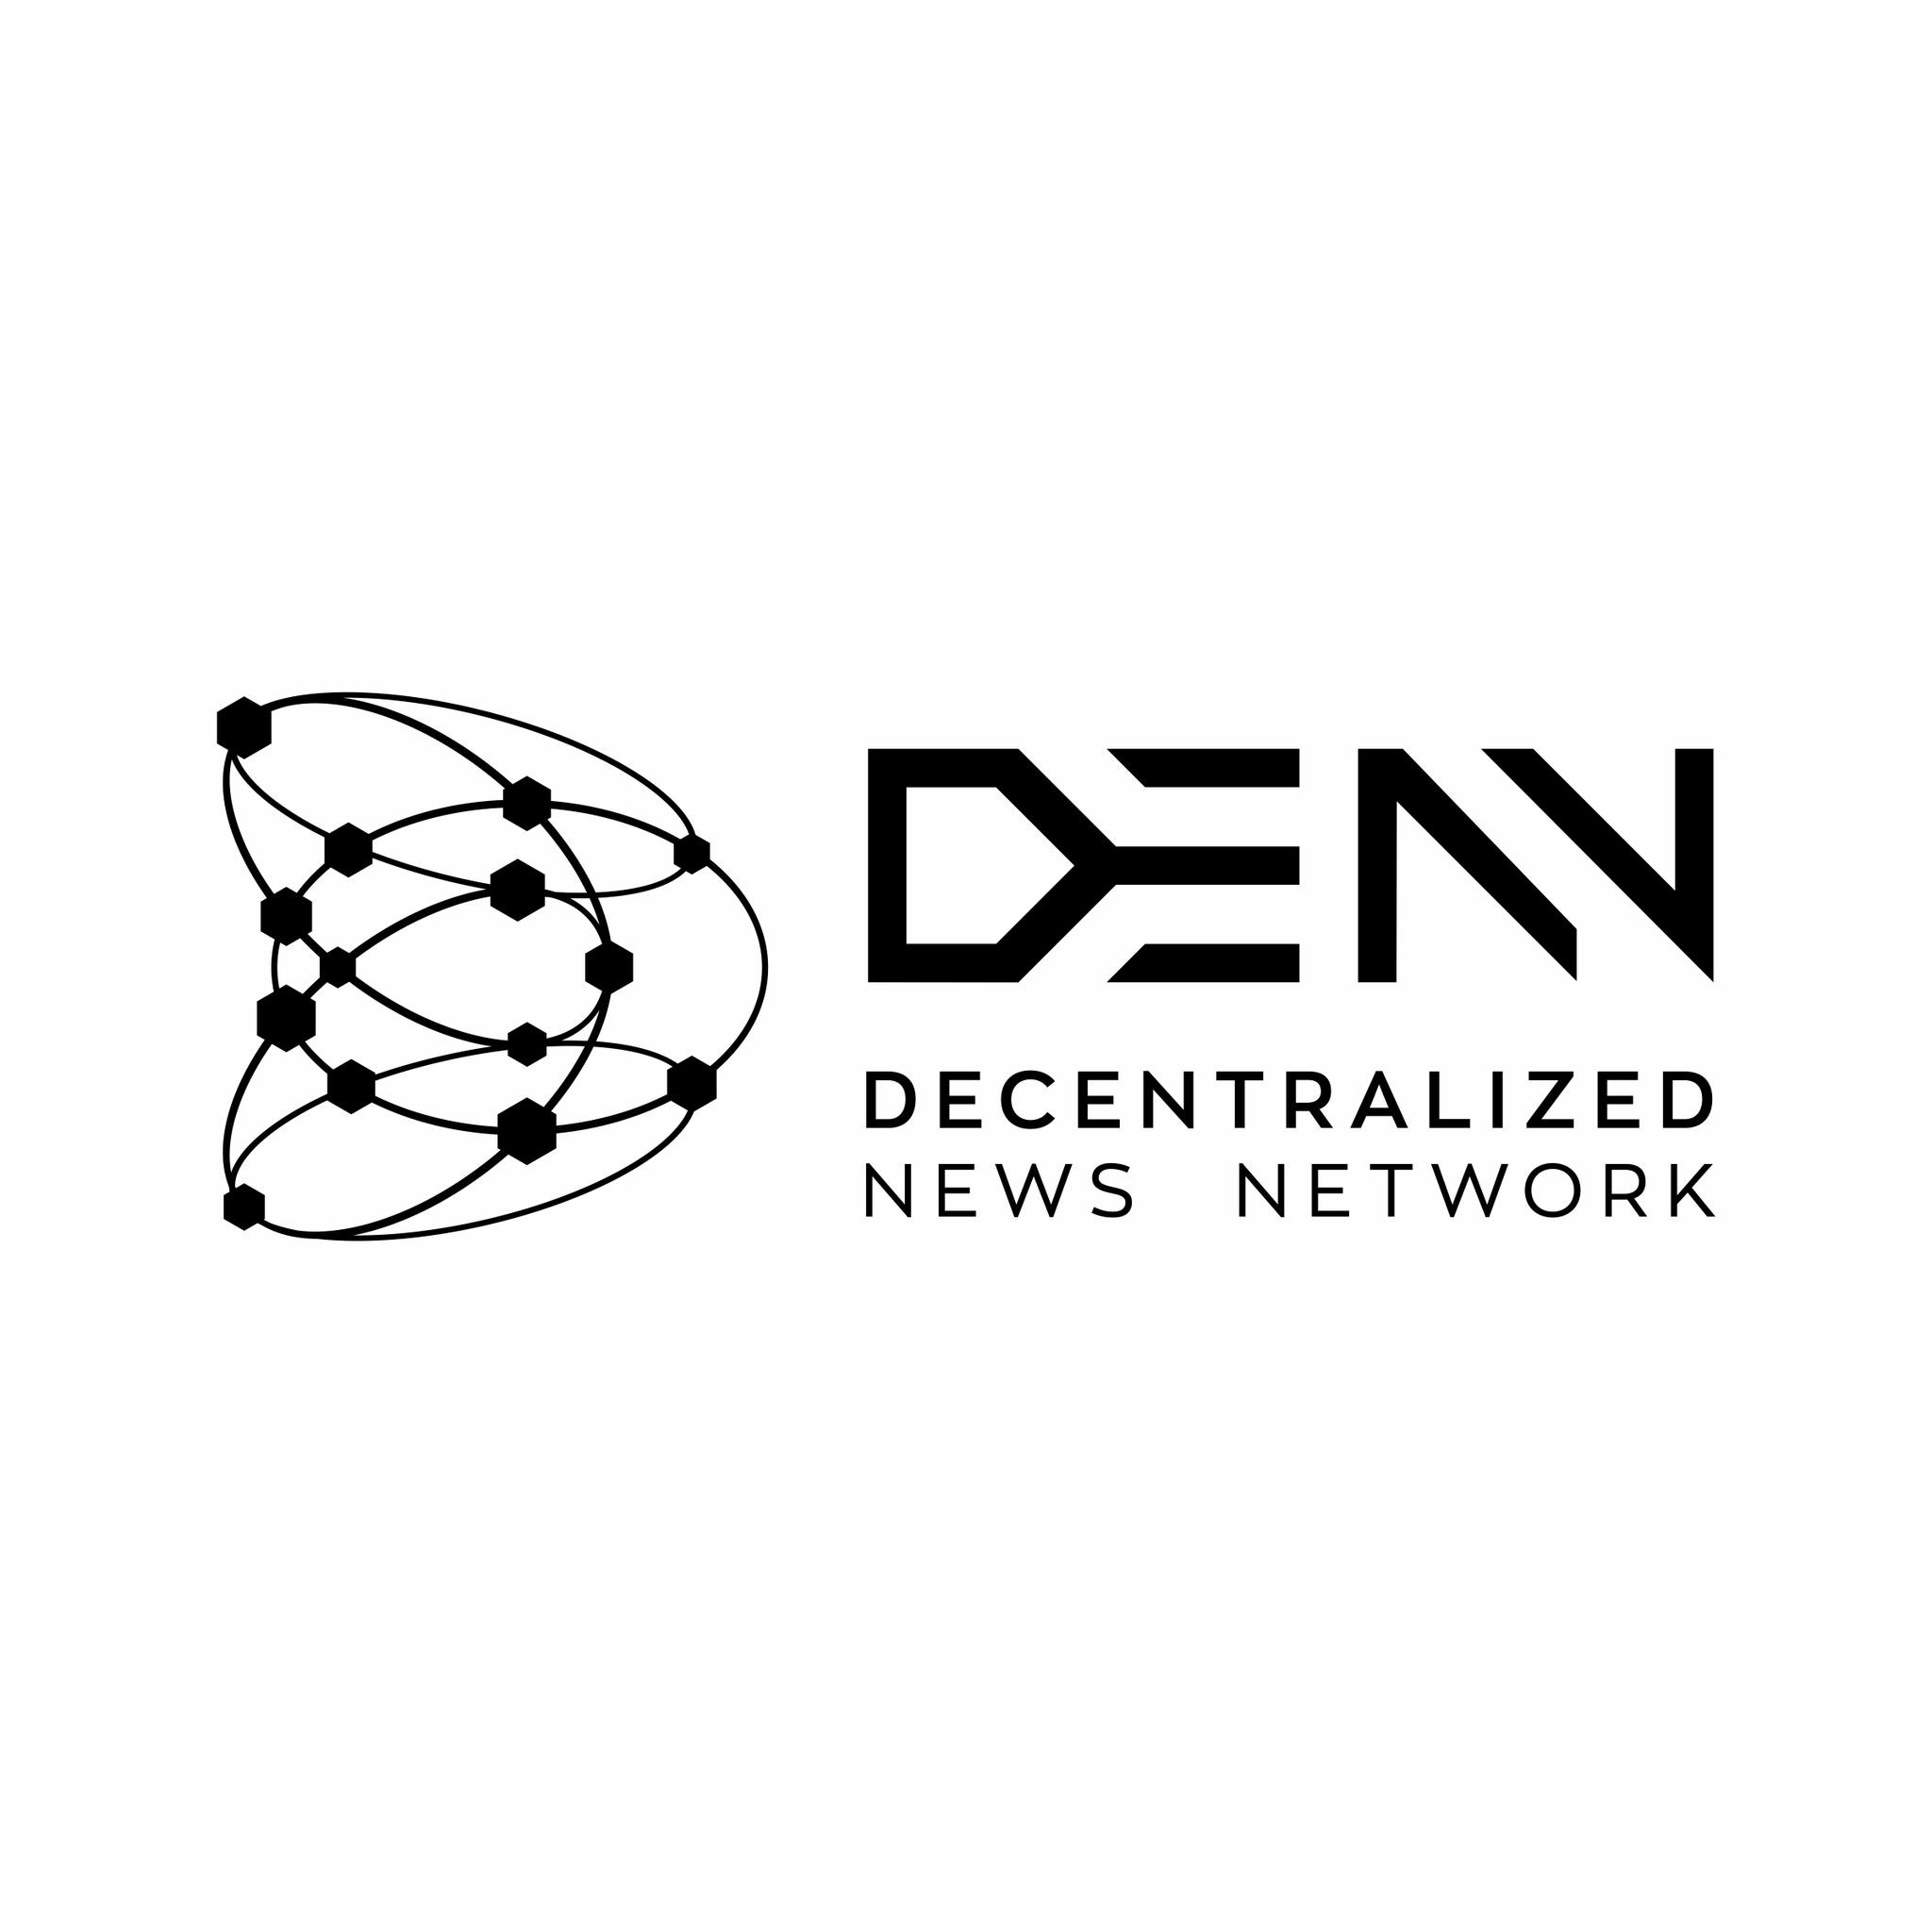 Project DENN logo